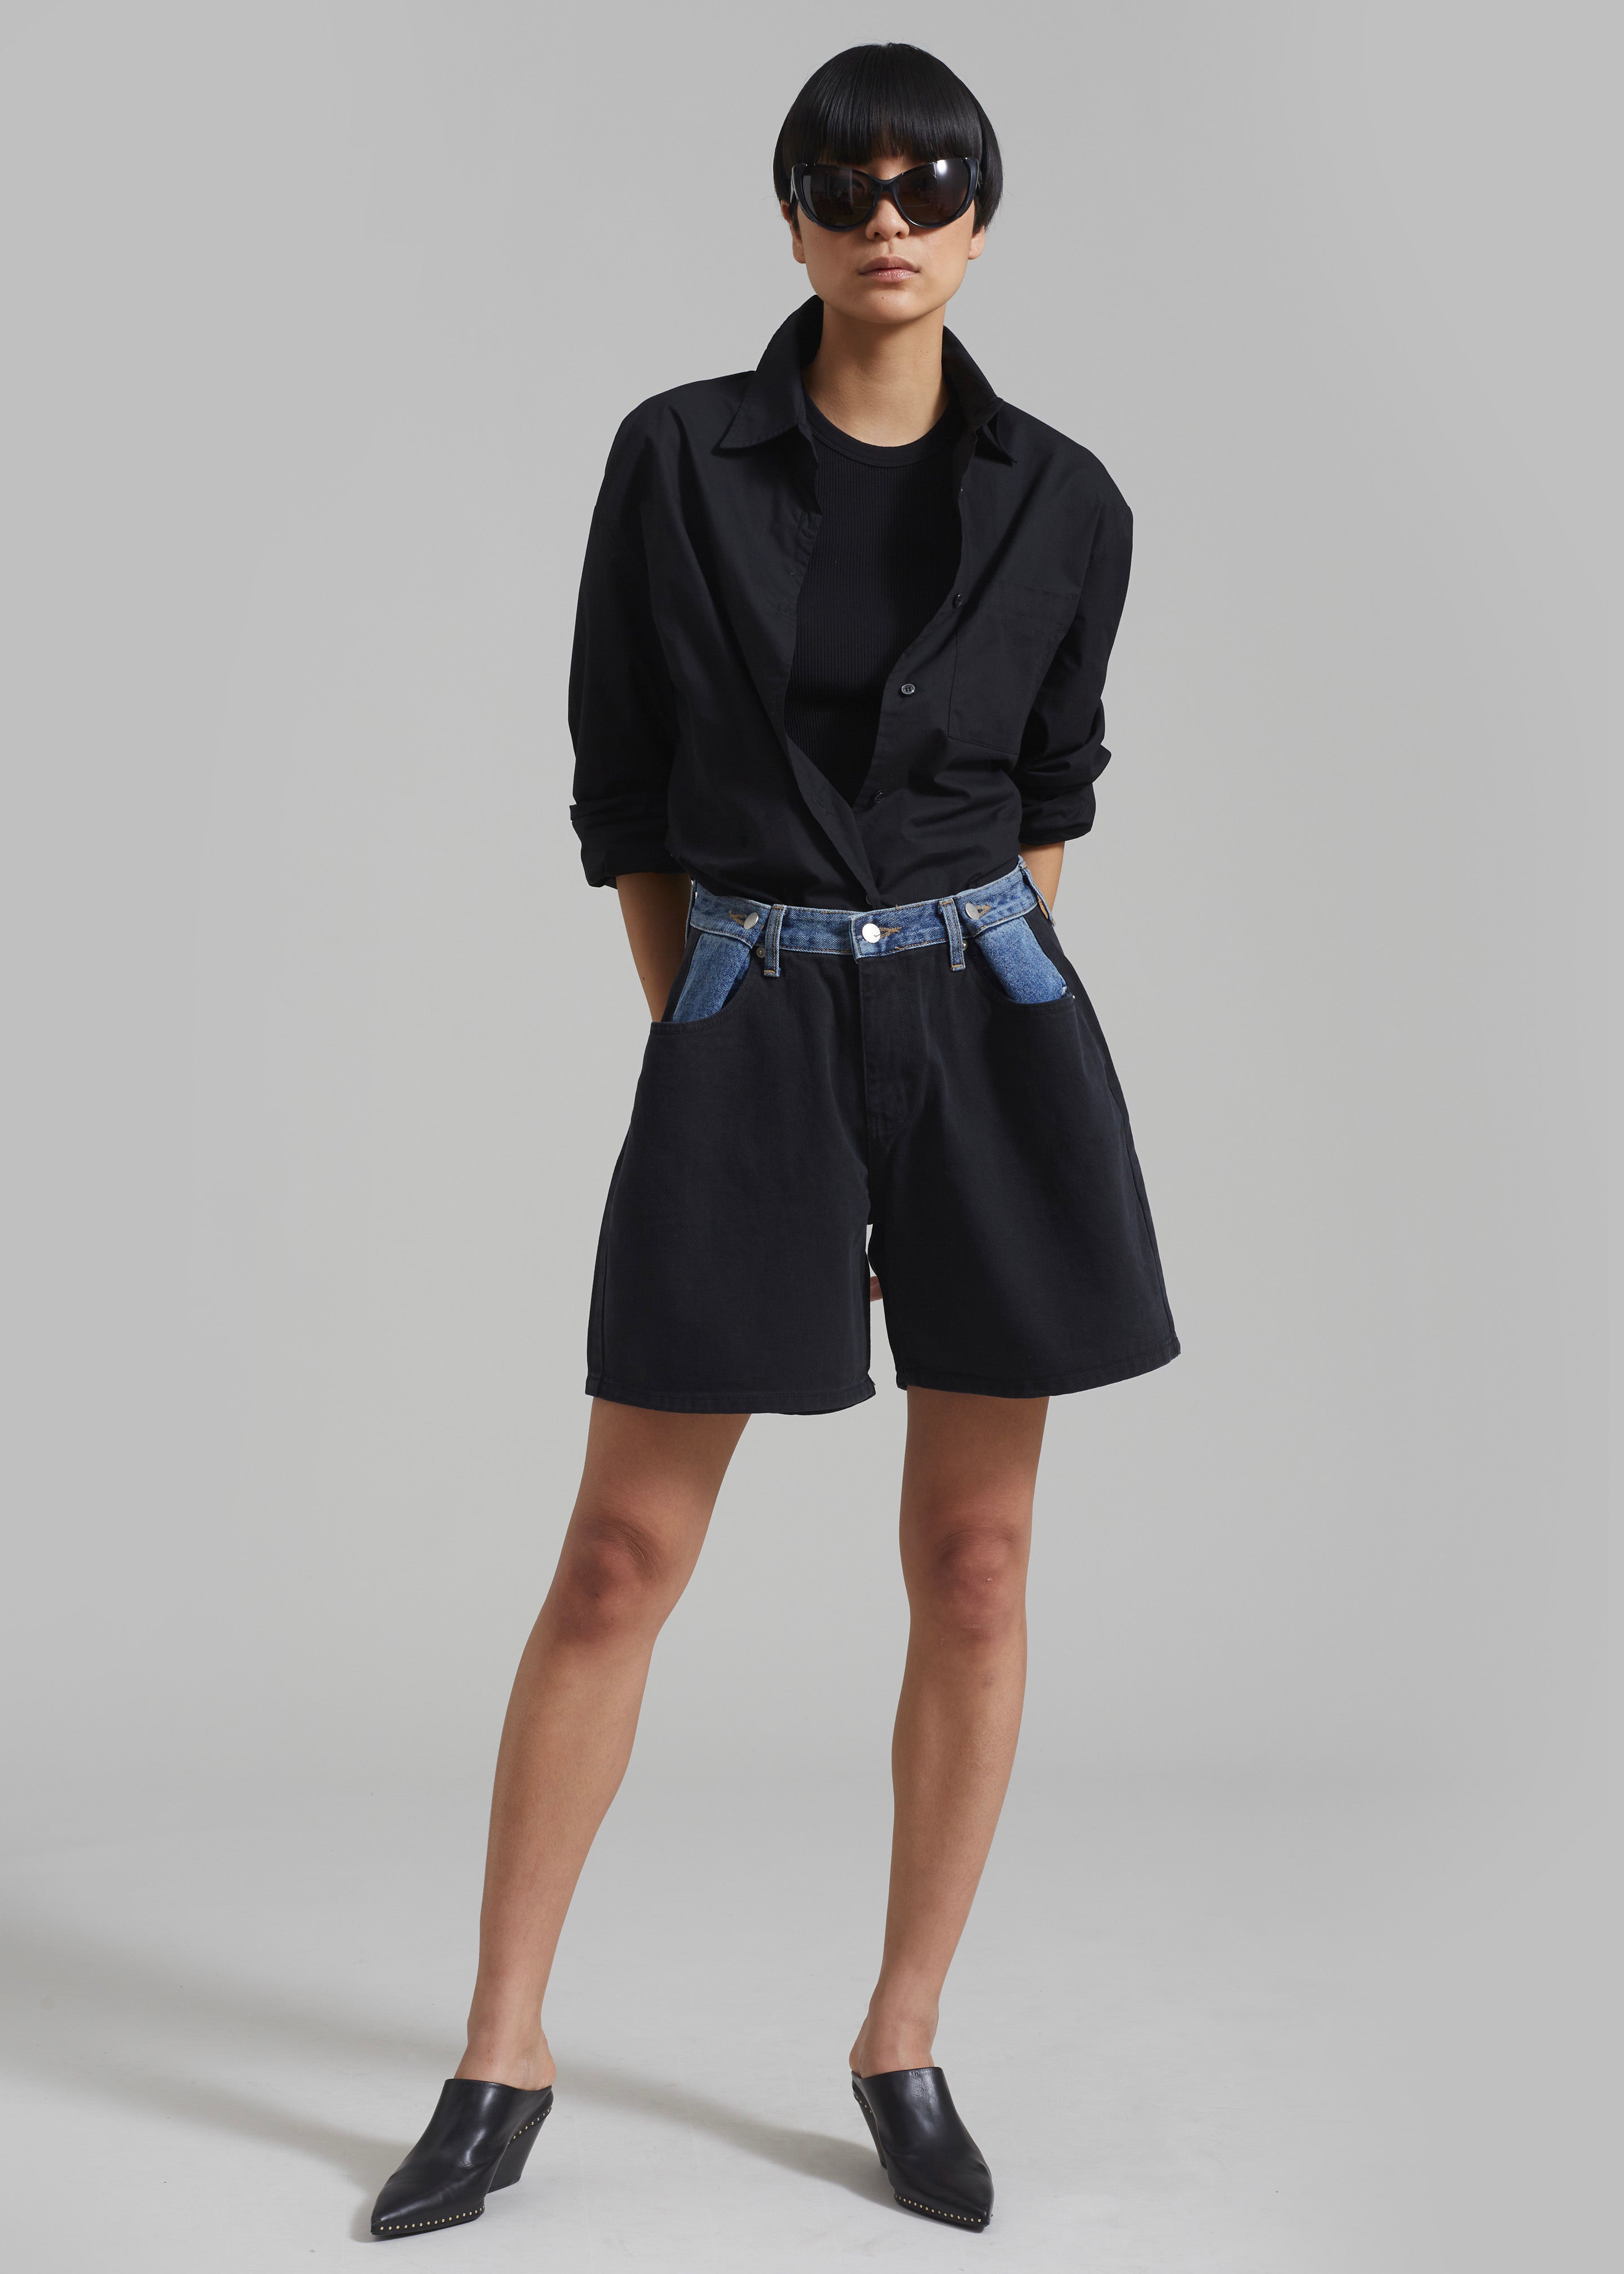 Hayla Contrast Denim Shorts - Black/Blue - 4